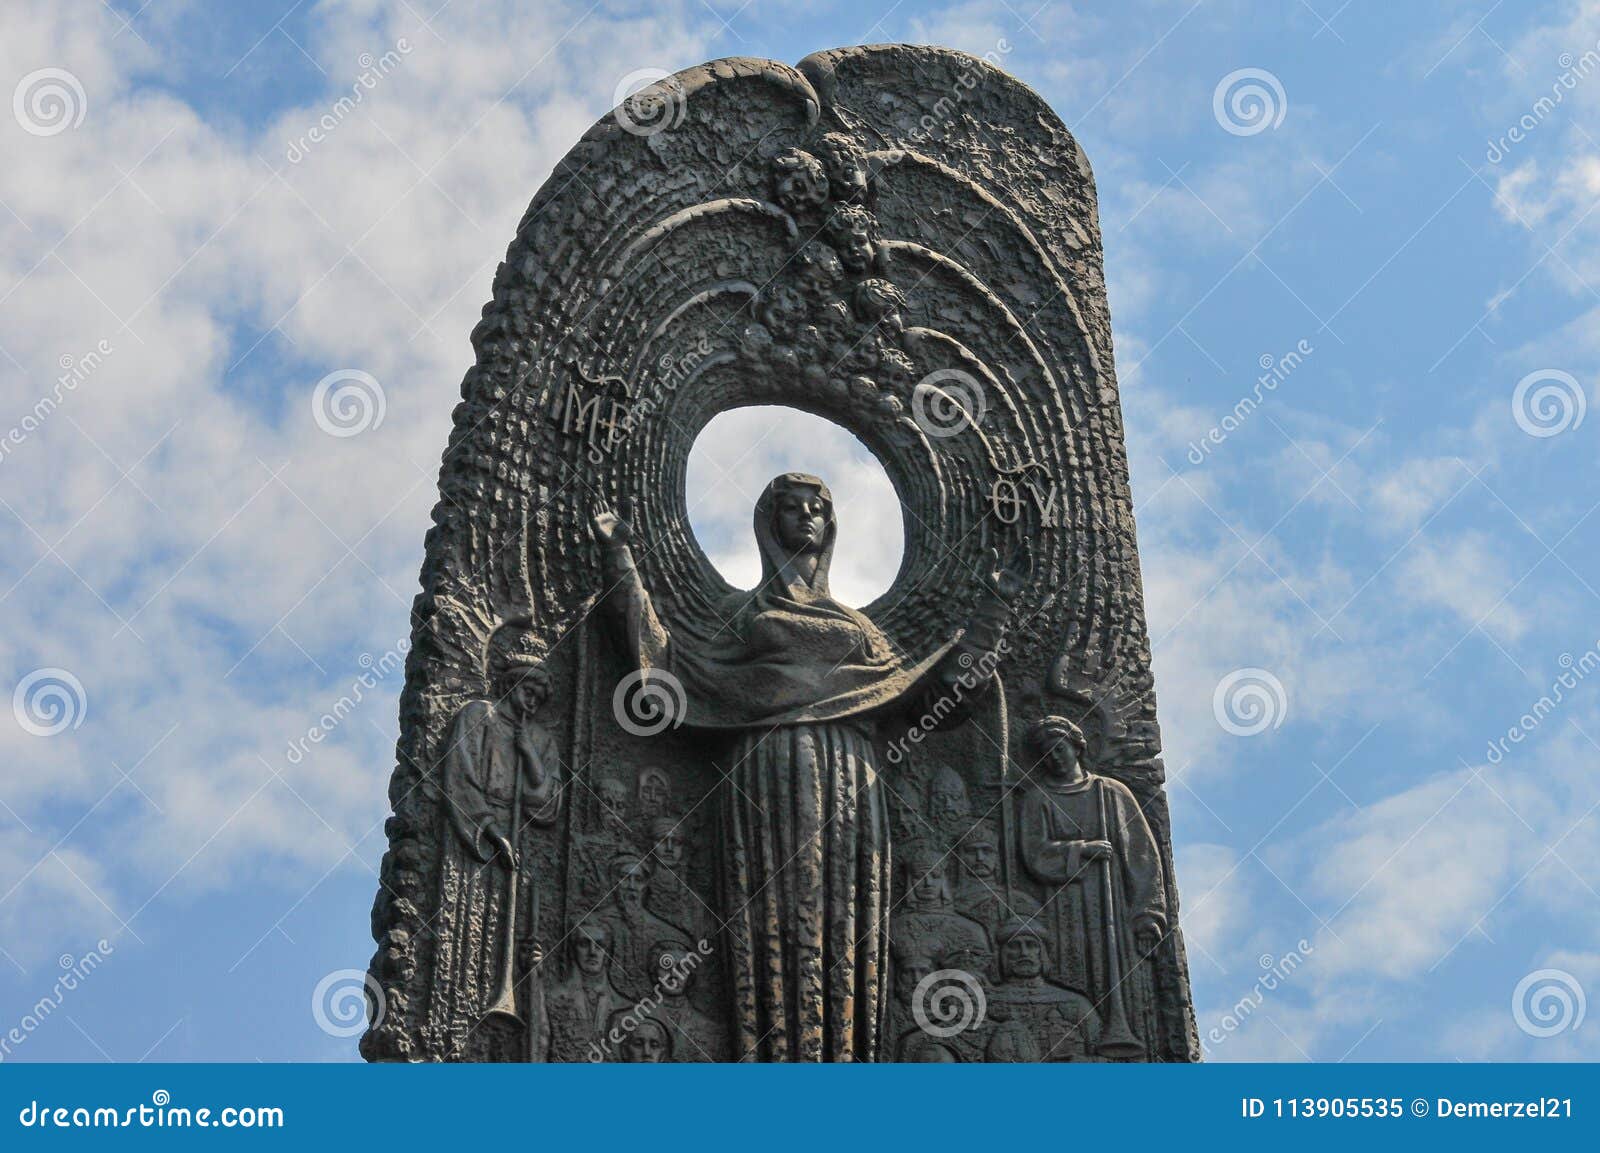 taras shevchenko monument - lvov, ukraine